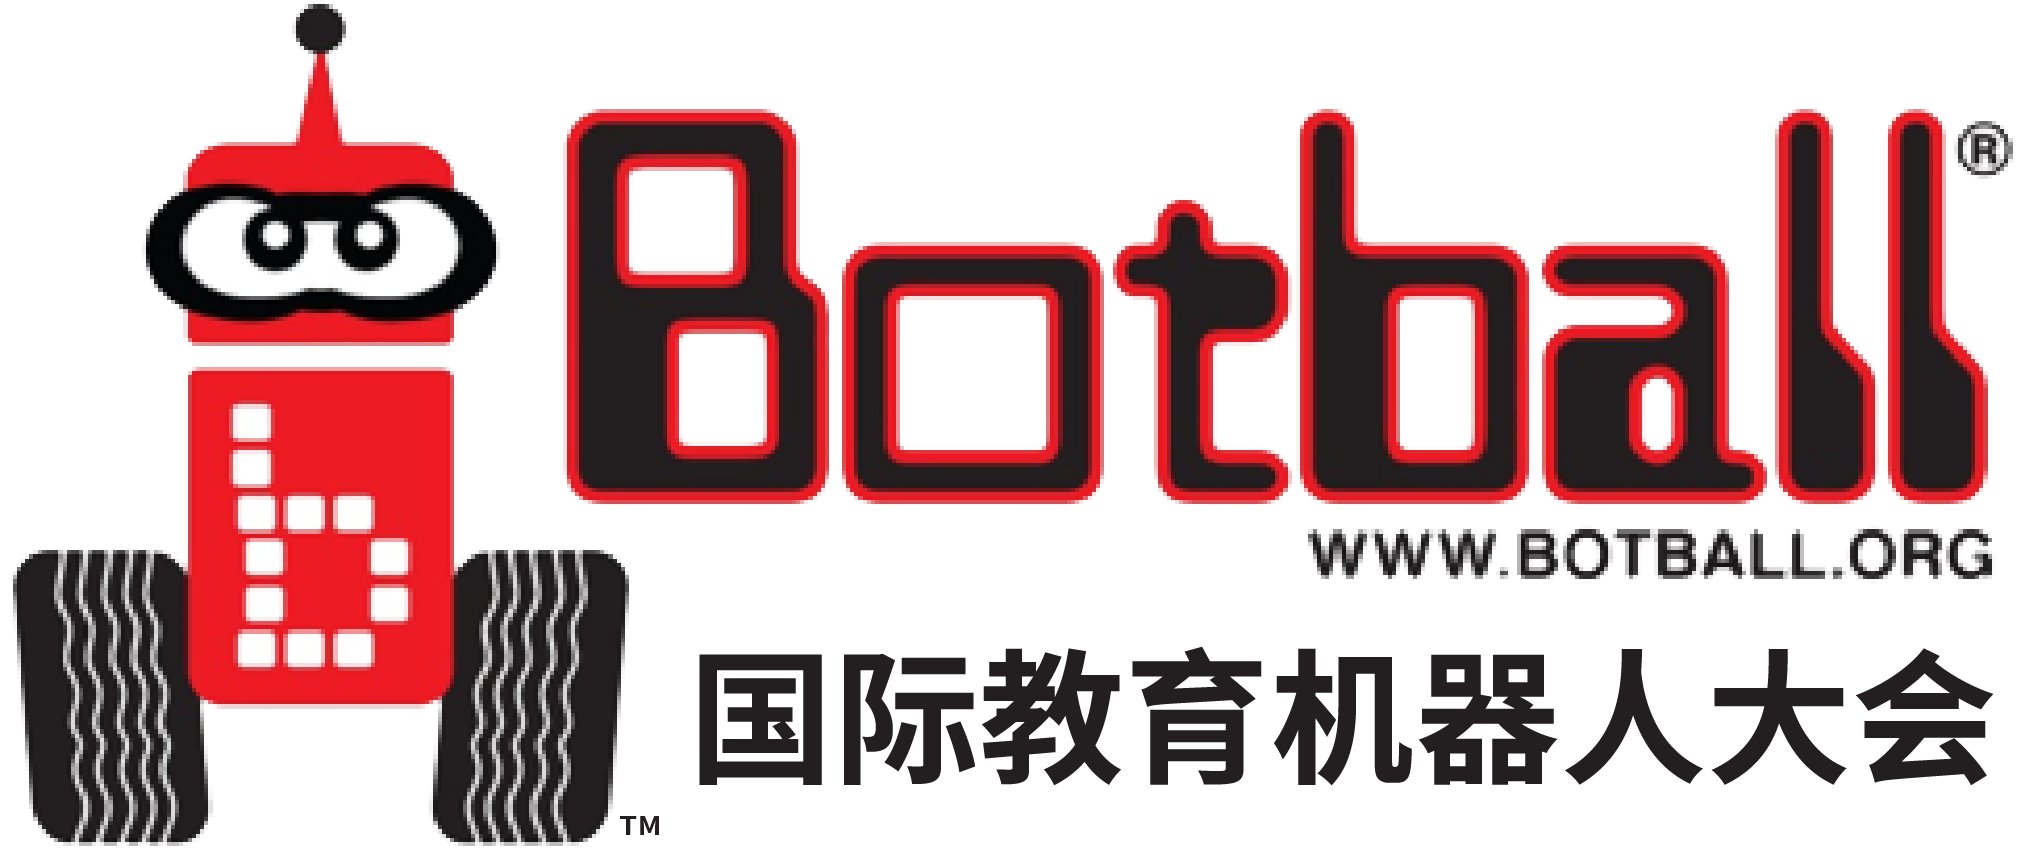 Botball国际机器人大会介绍.